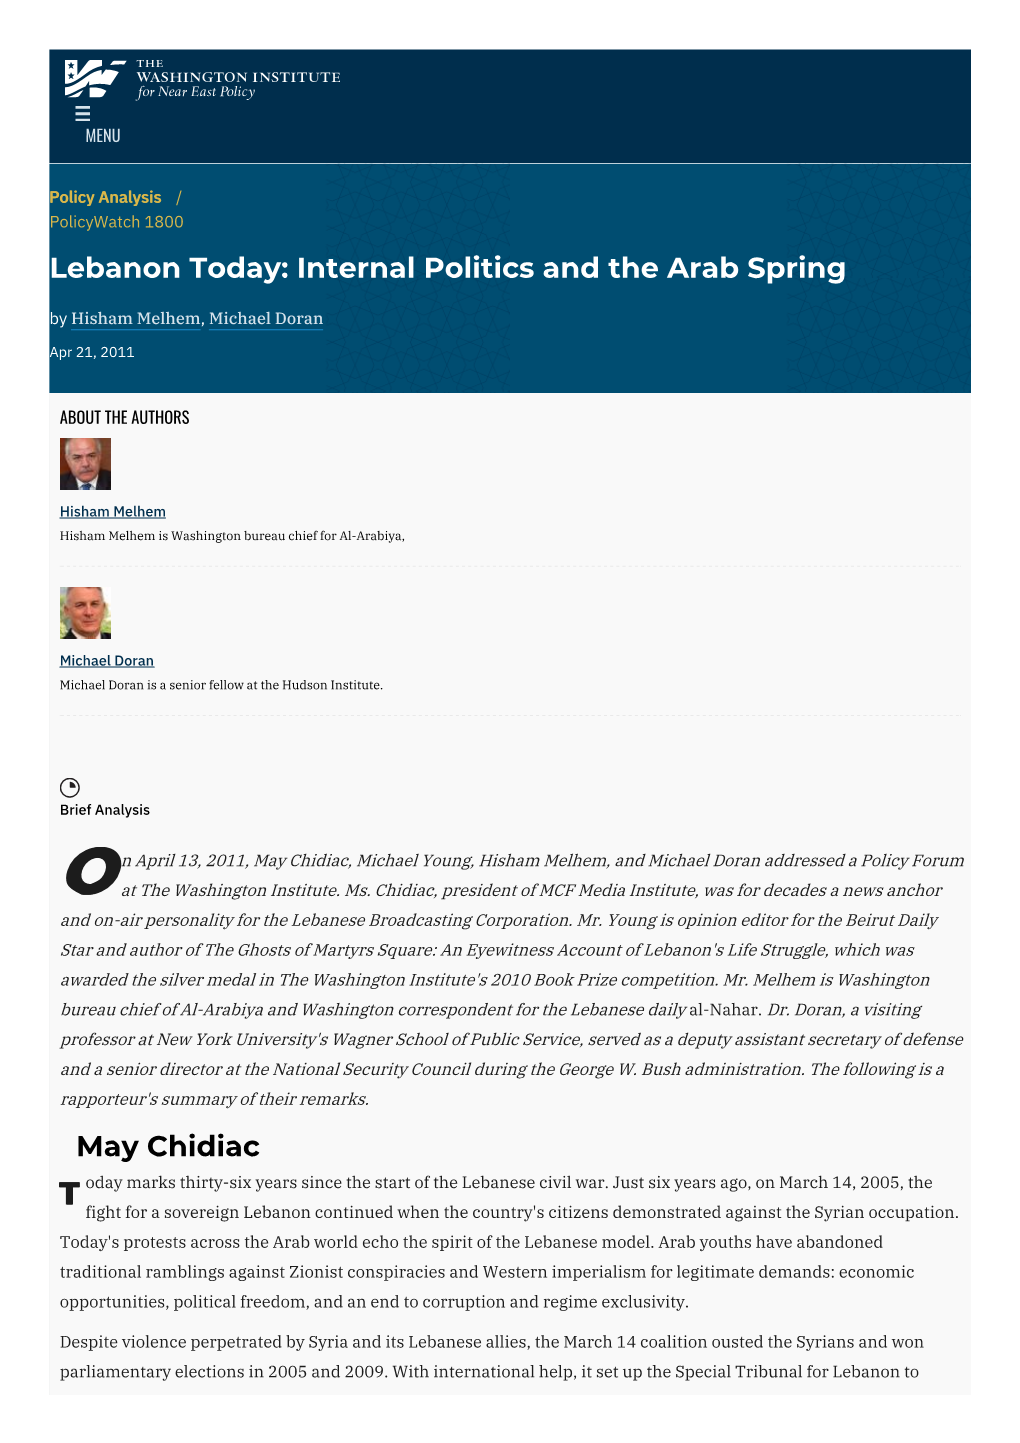 Internal Politics and the Arab Spring by Hisham Melhem, Michael Doran